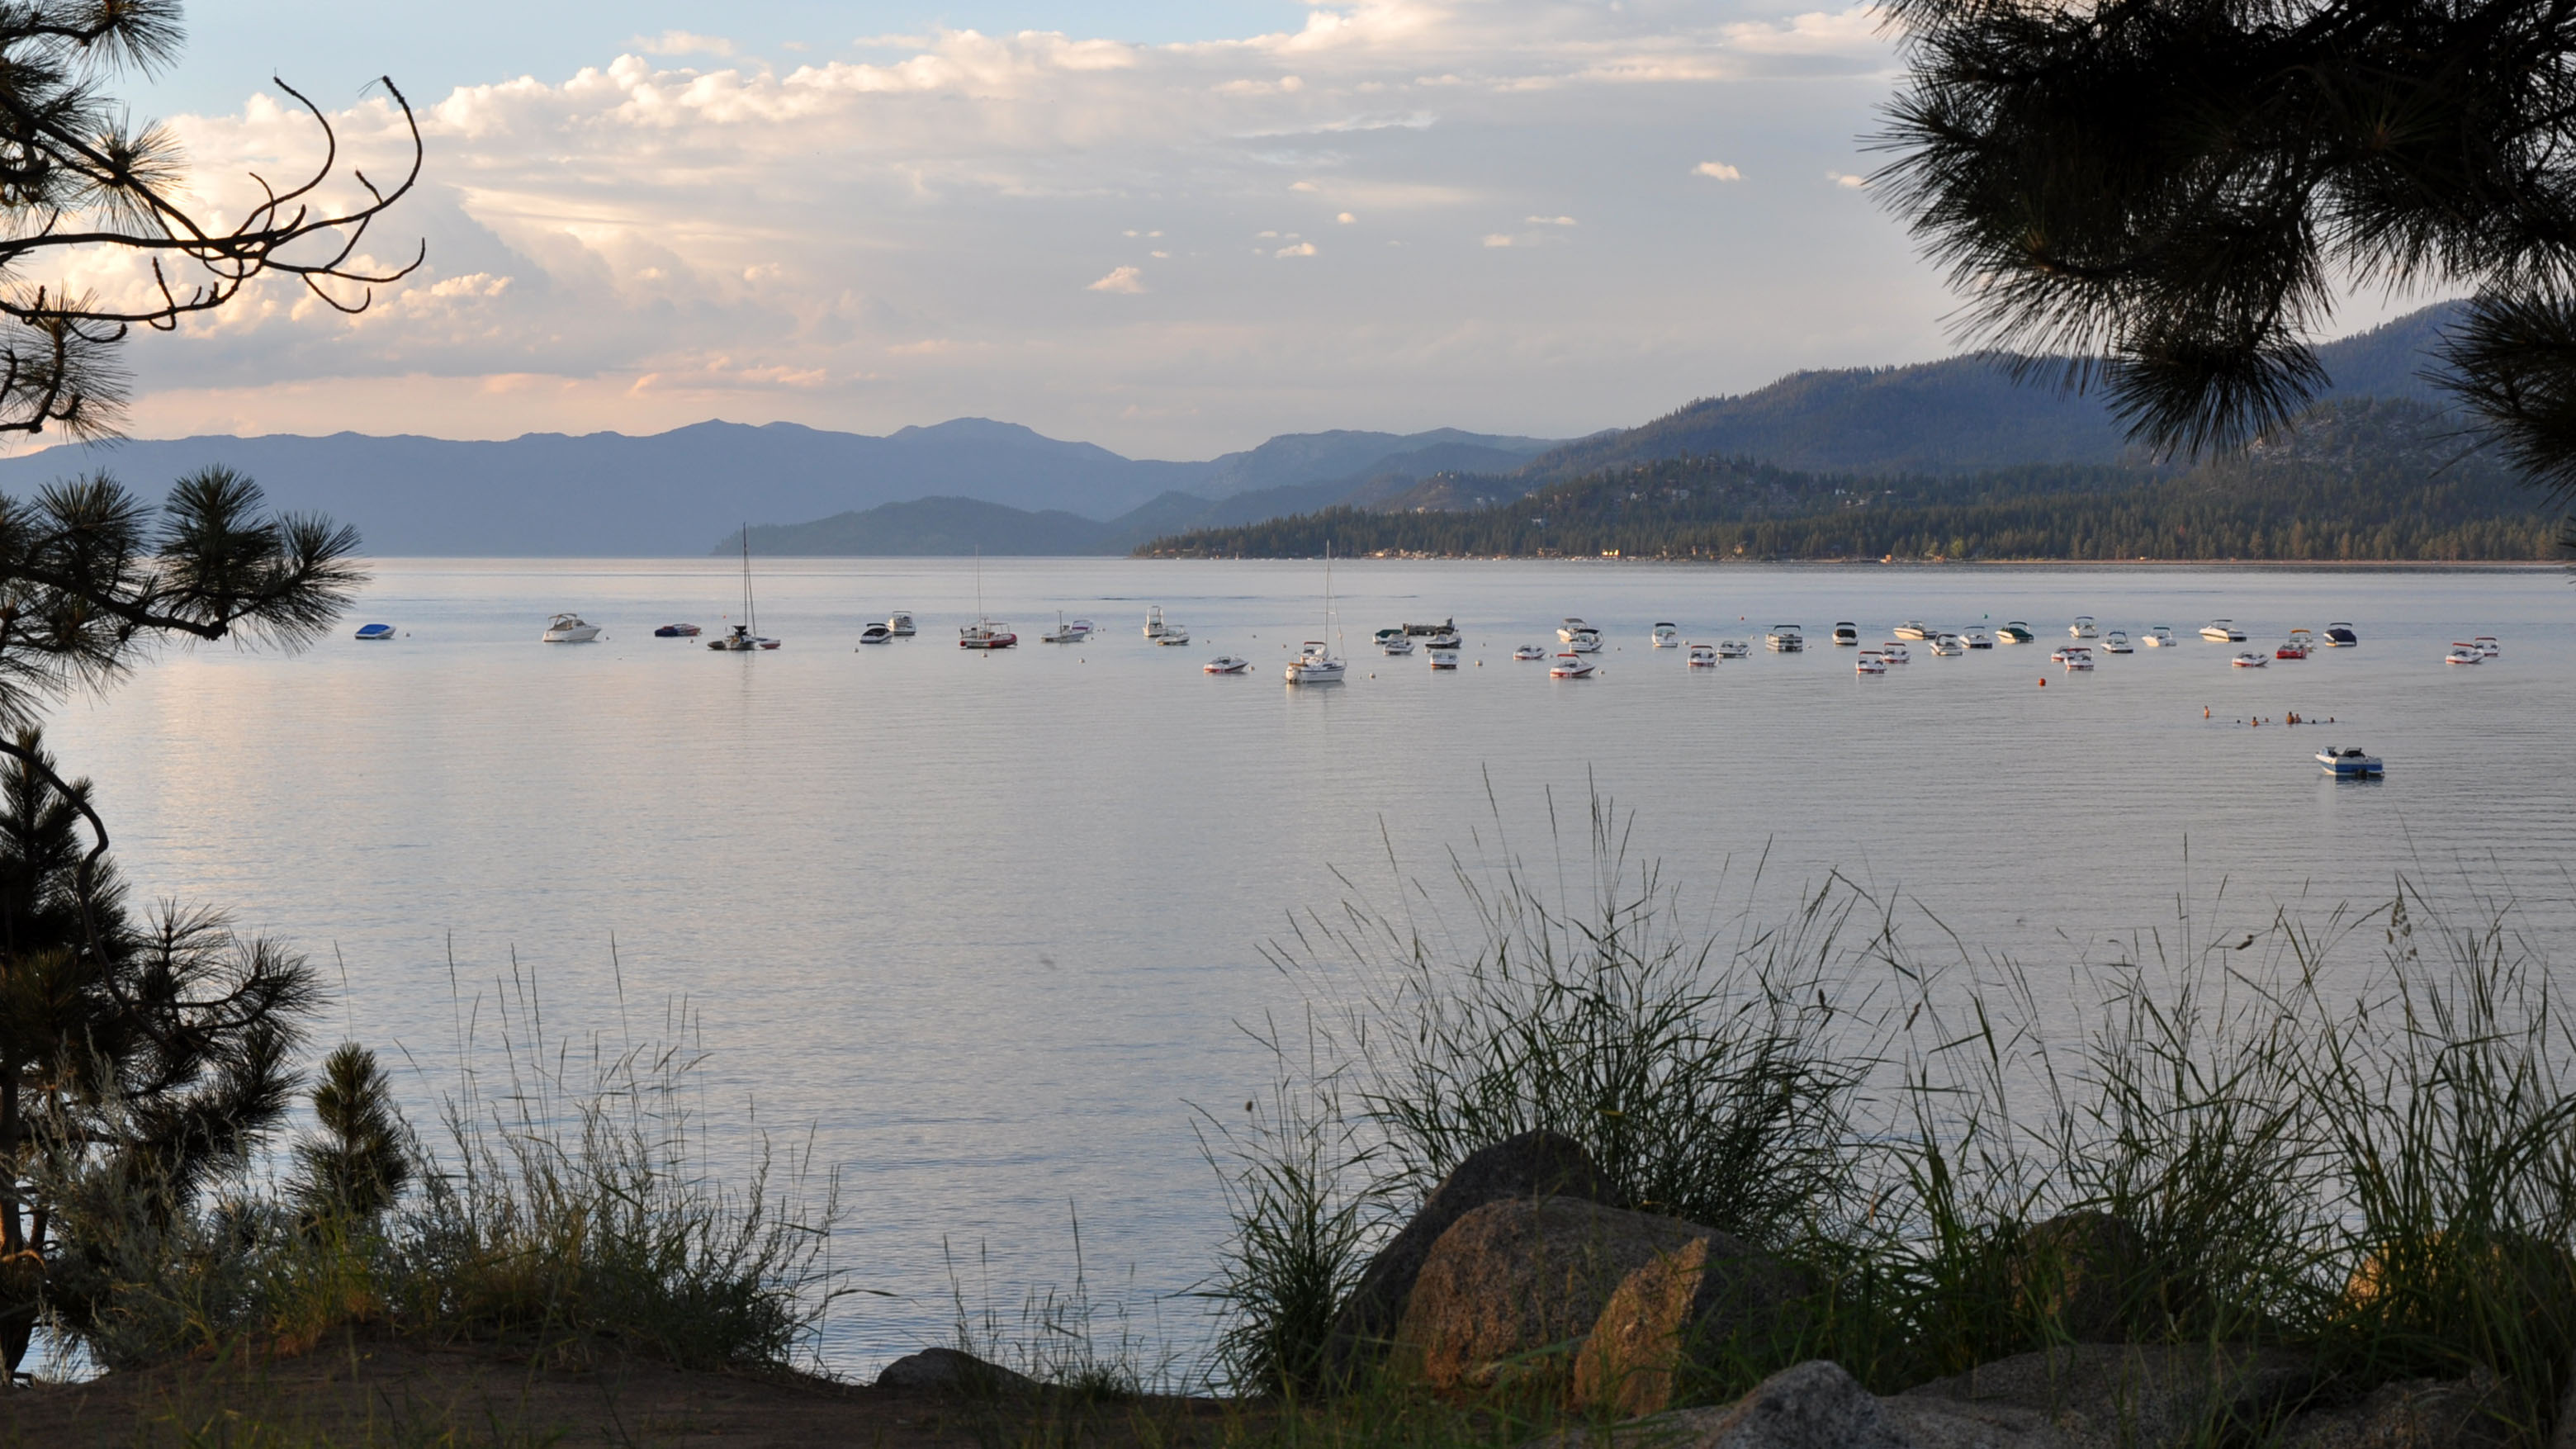 Boats in Lake Tahoe